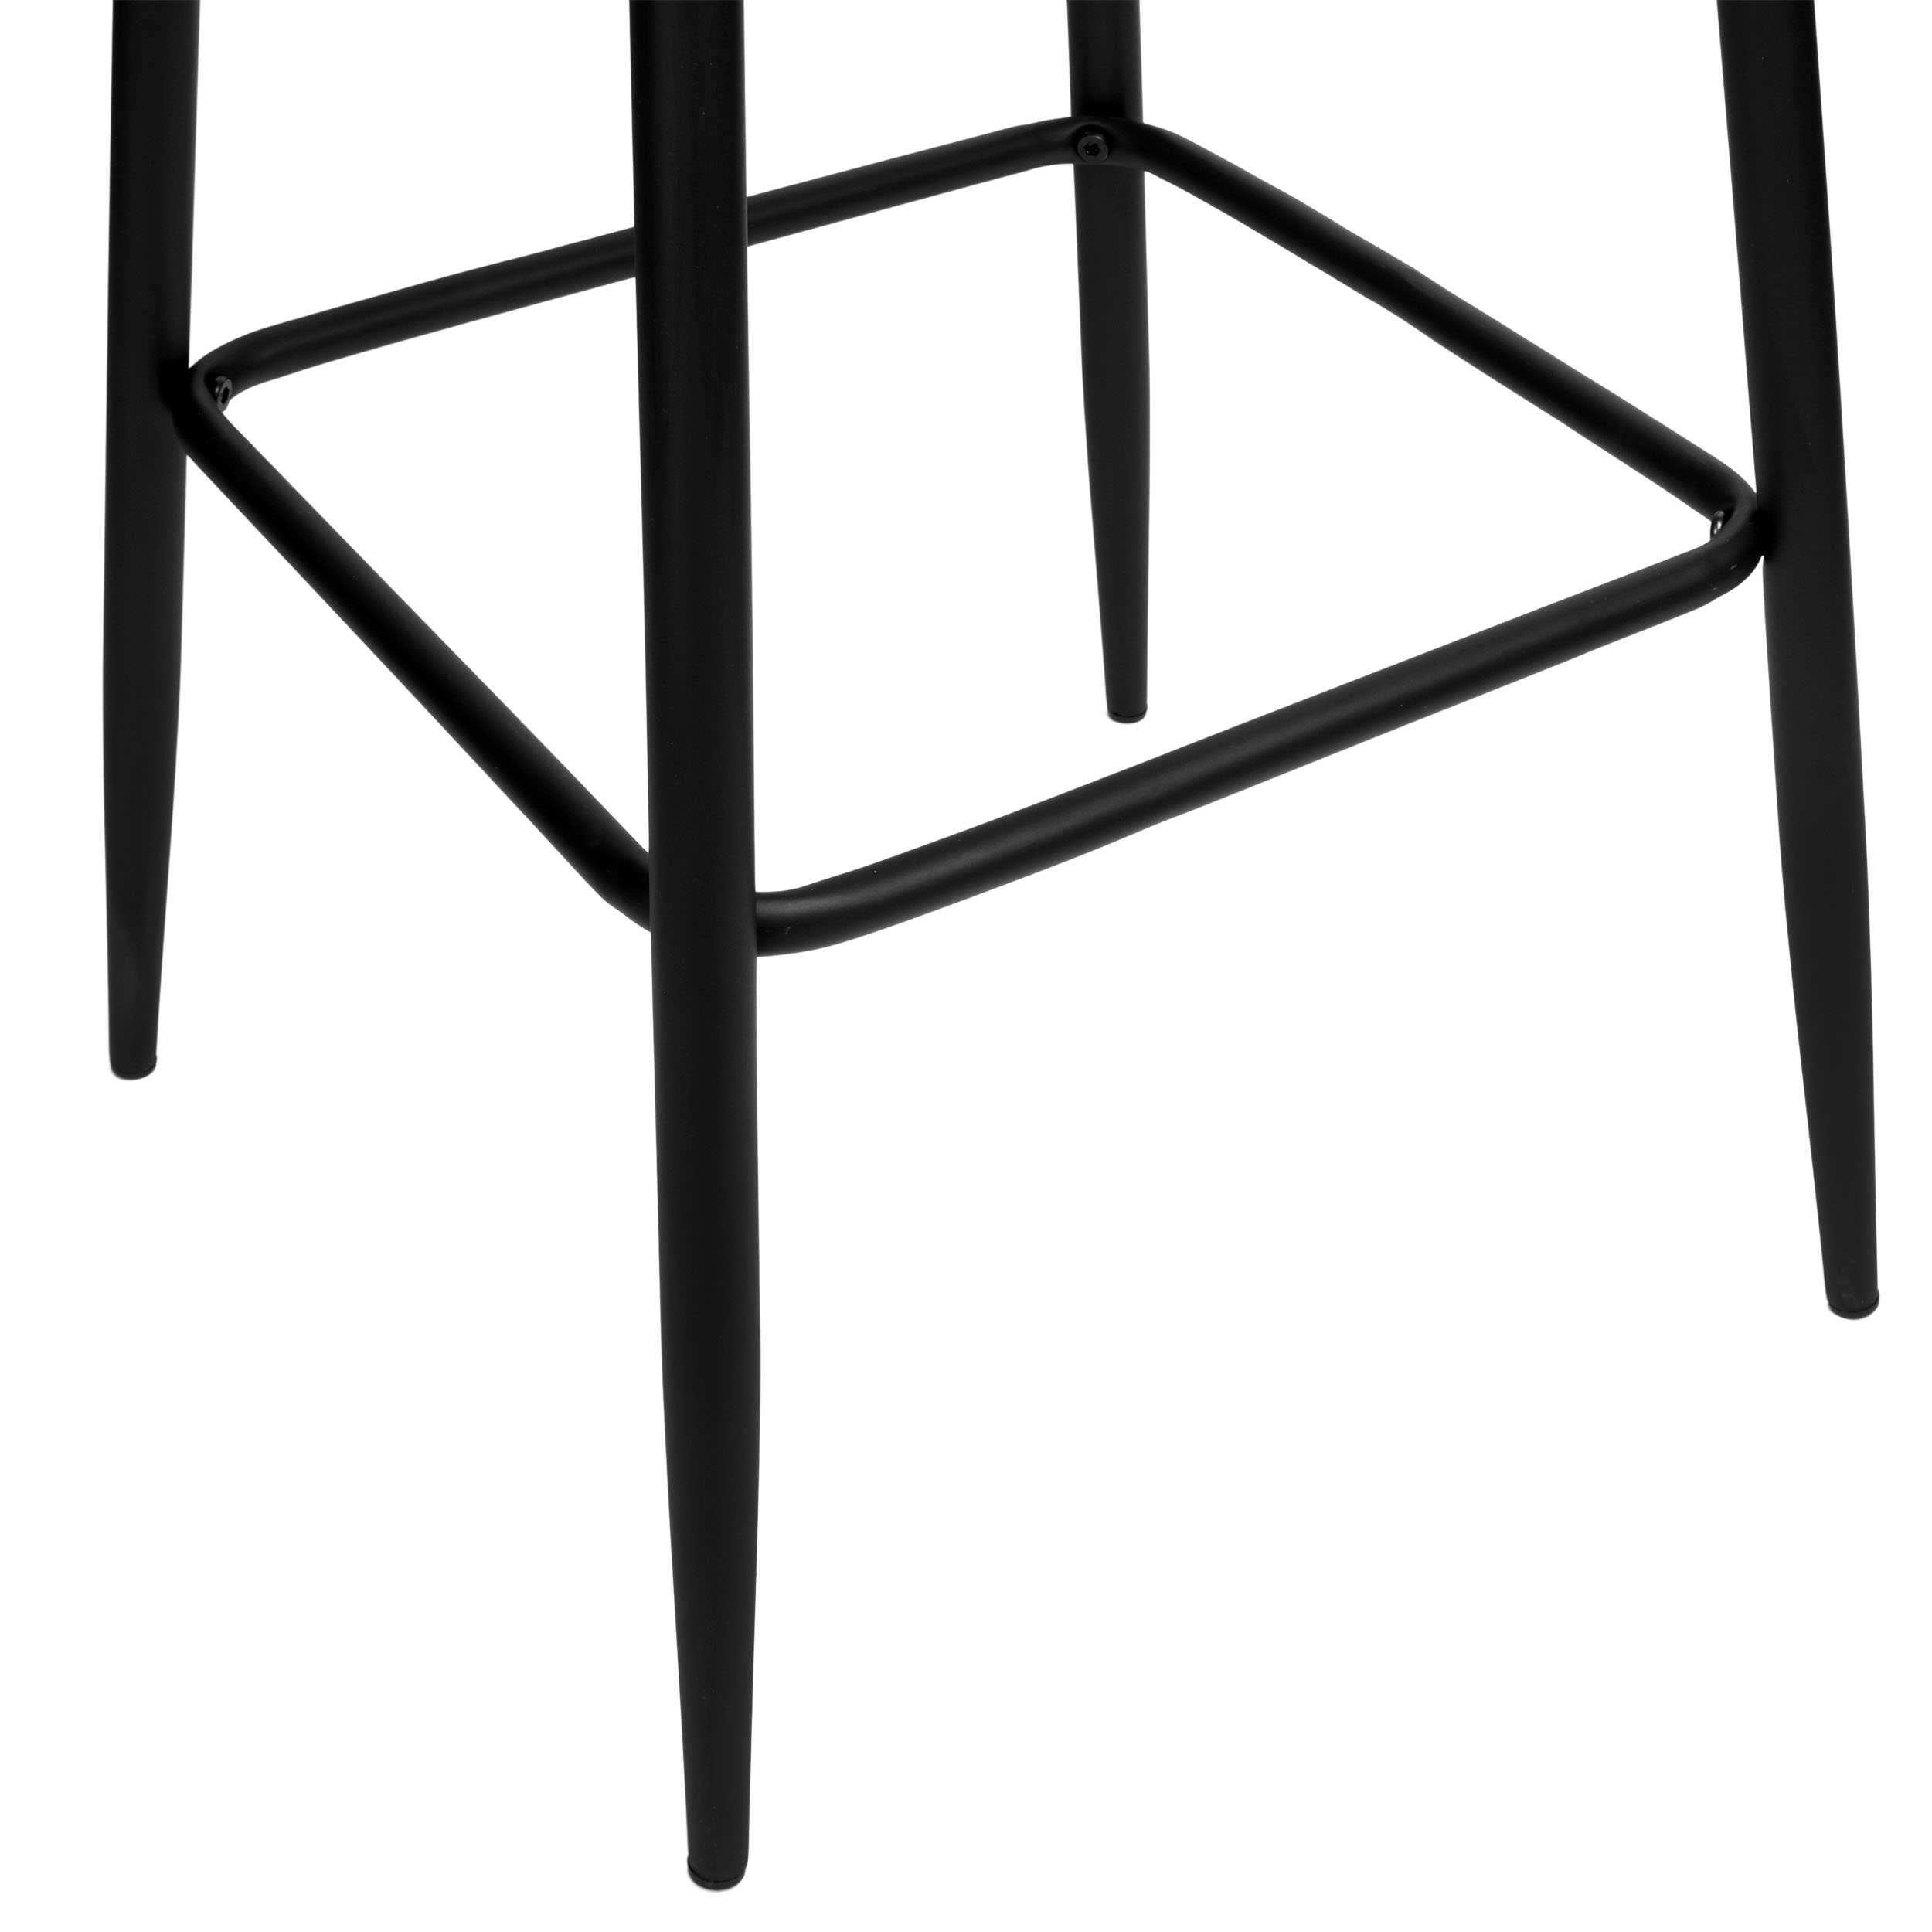 Krzesło barowe TORONTO VELVET  aksamitne czarne VELVET